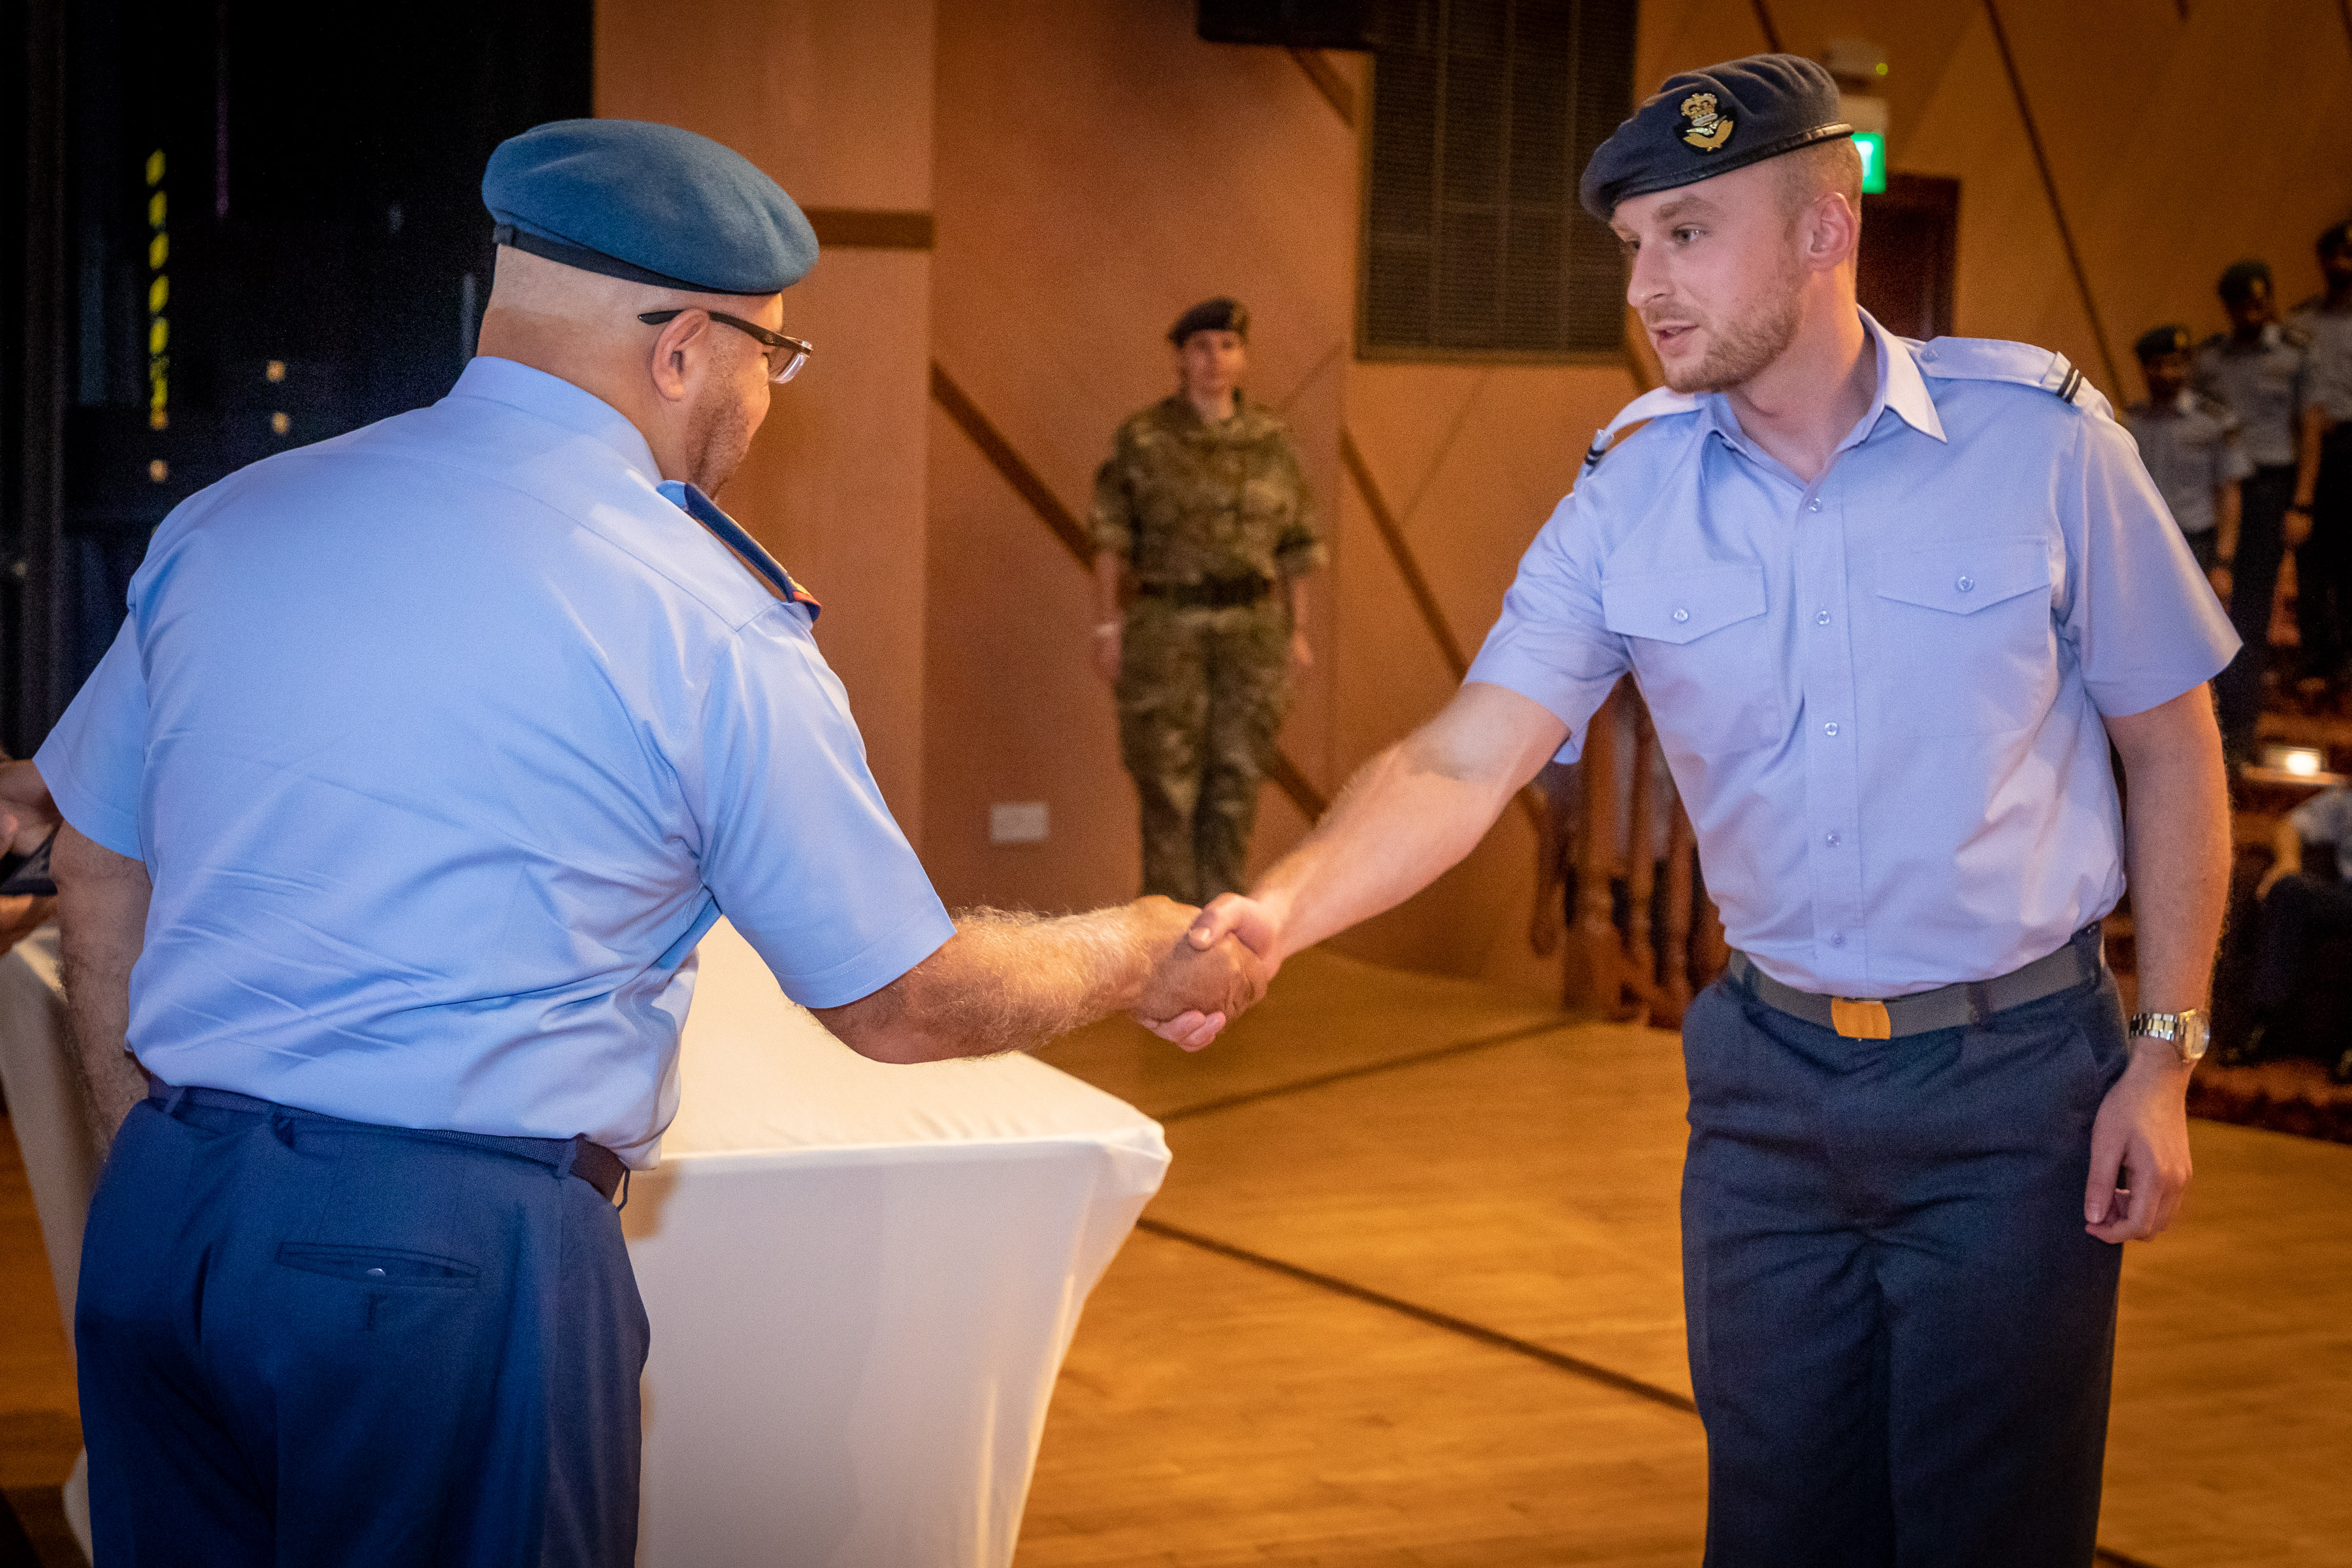 Image shows RAF aviators shaking hands.